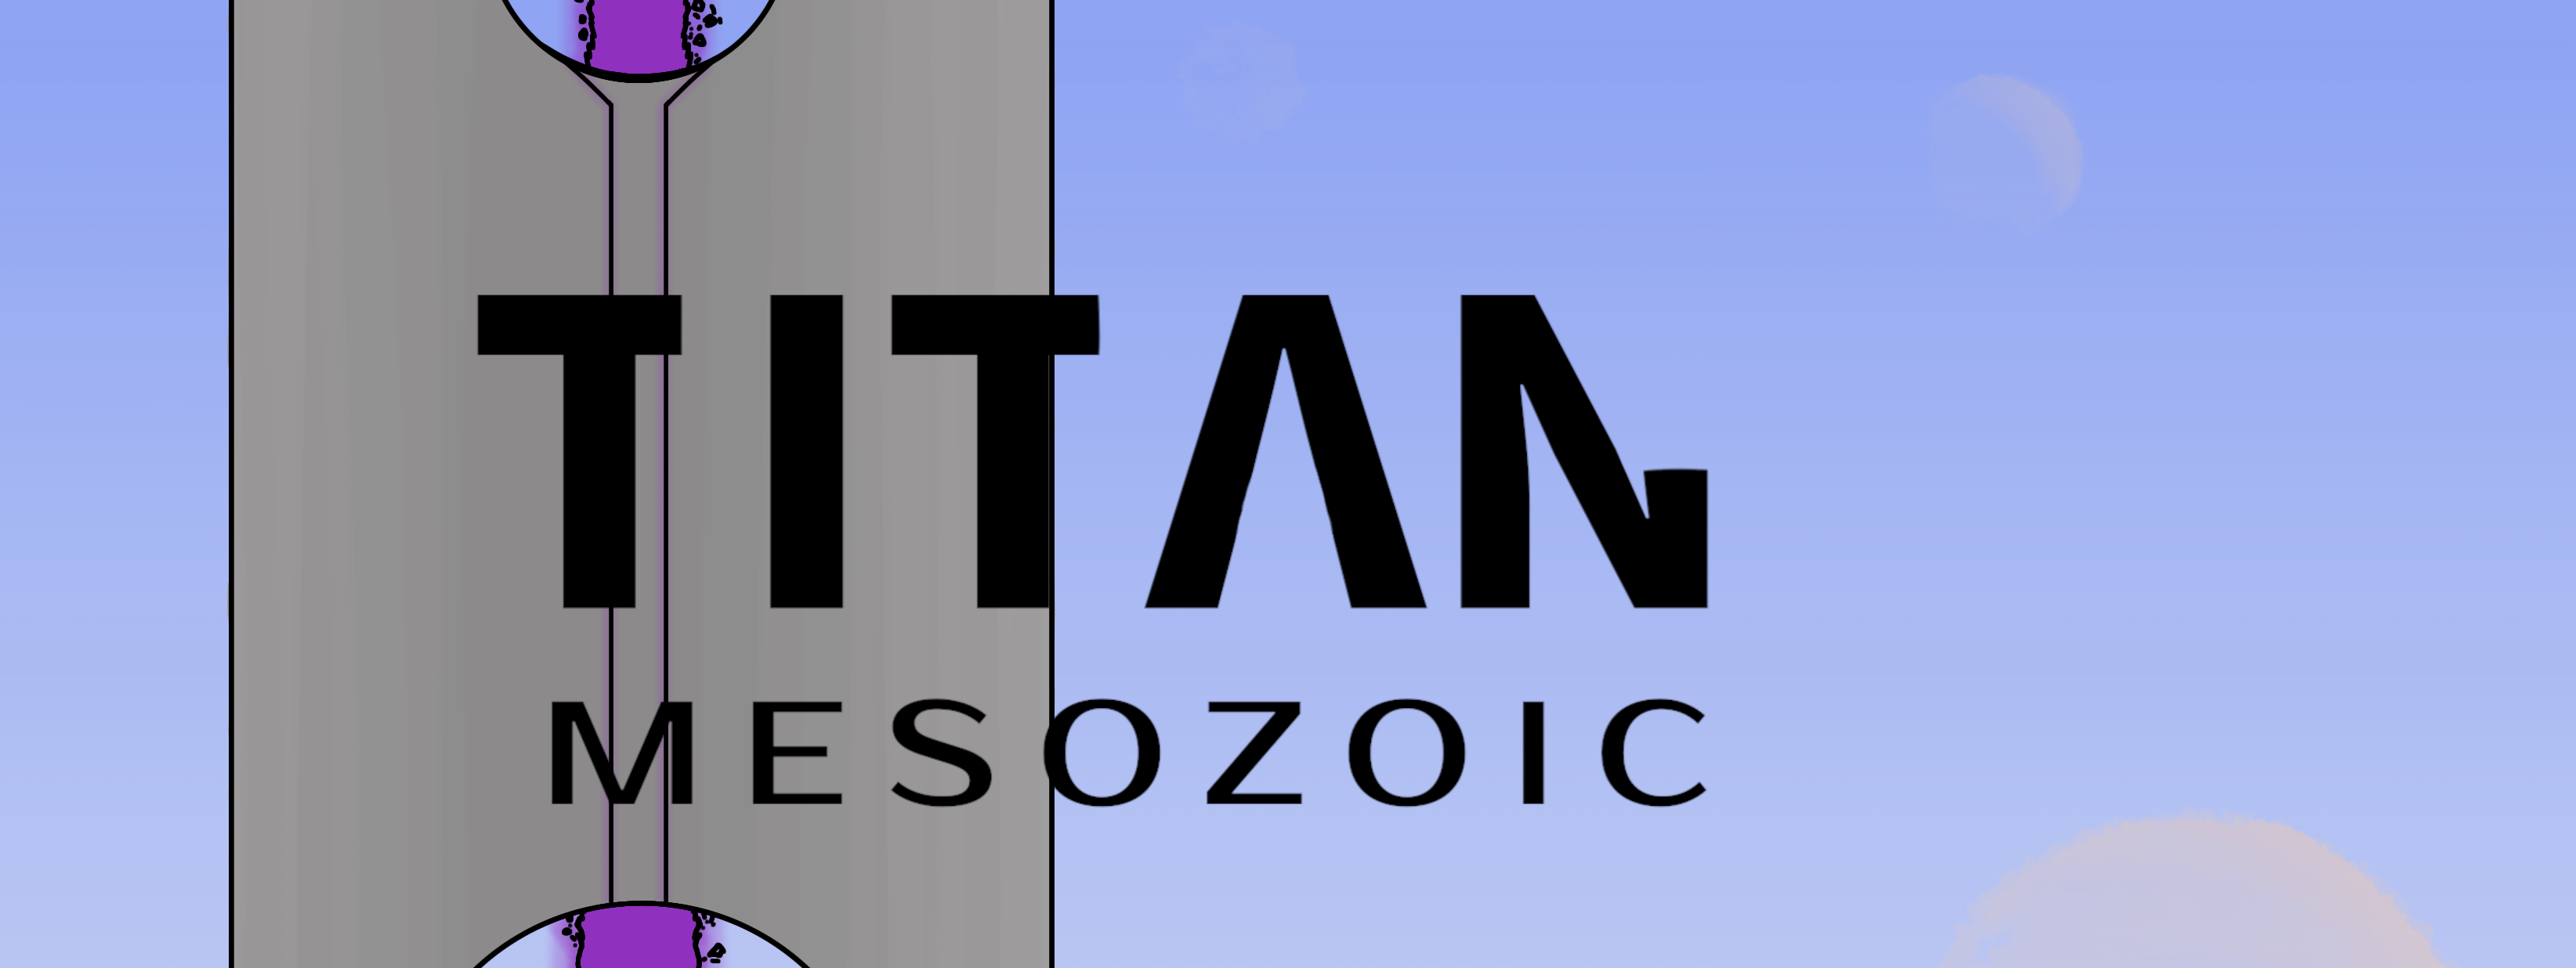 TITAN: Mesozoic